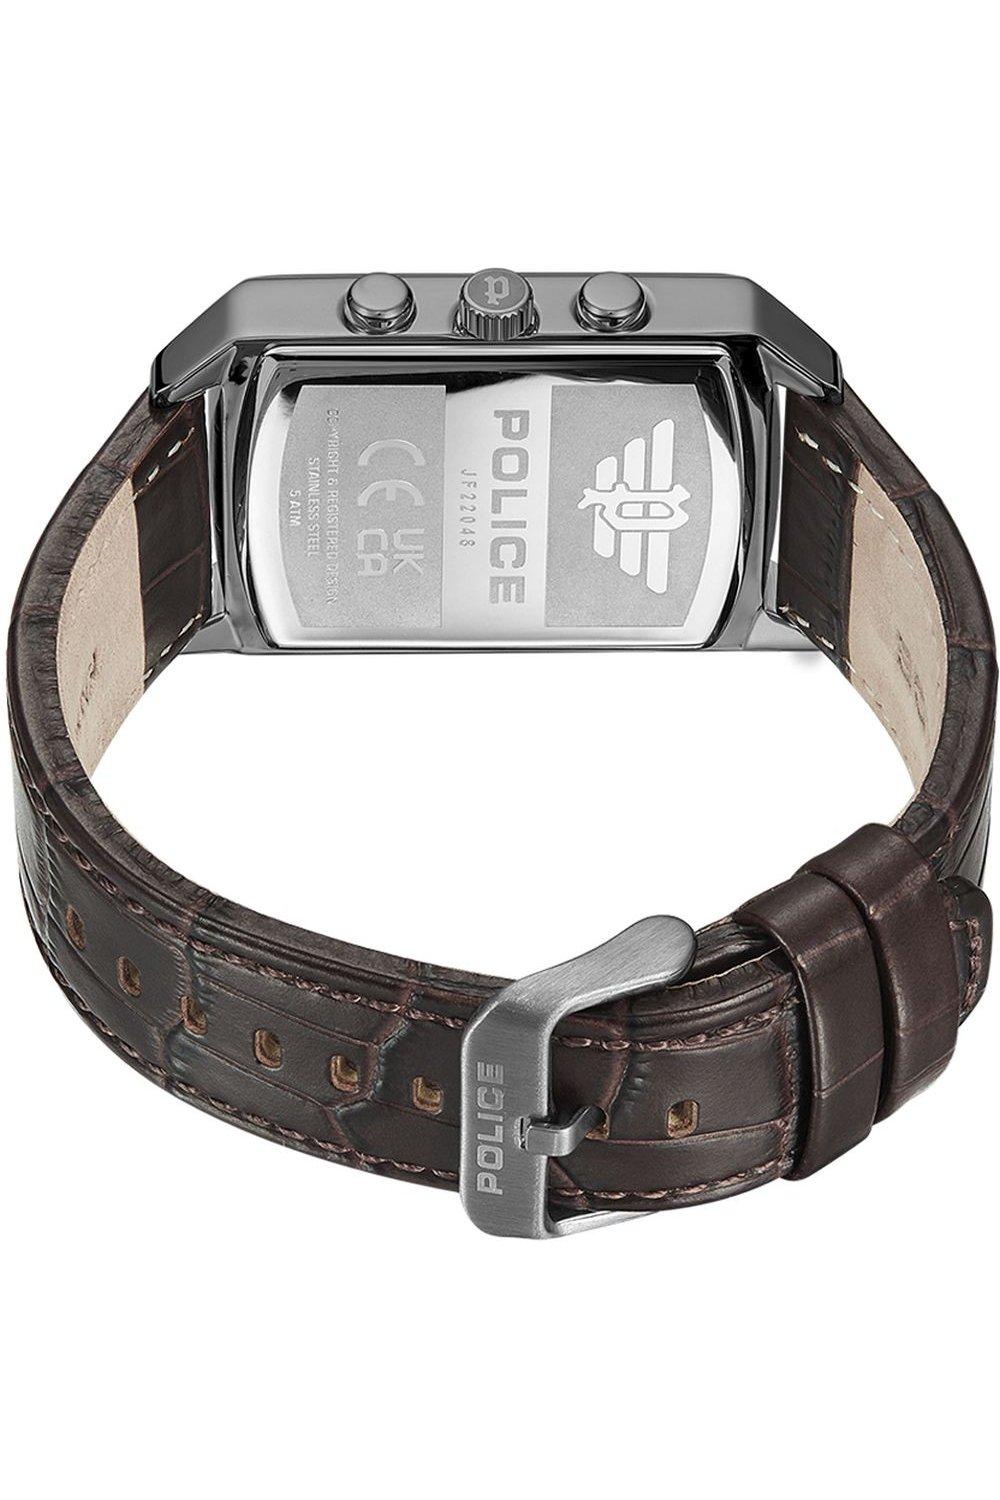 Analogue | Quartz Watch Police Fashion - Pewjf2204802 Saleve Stainless Watches | Steel